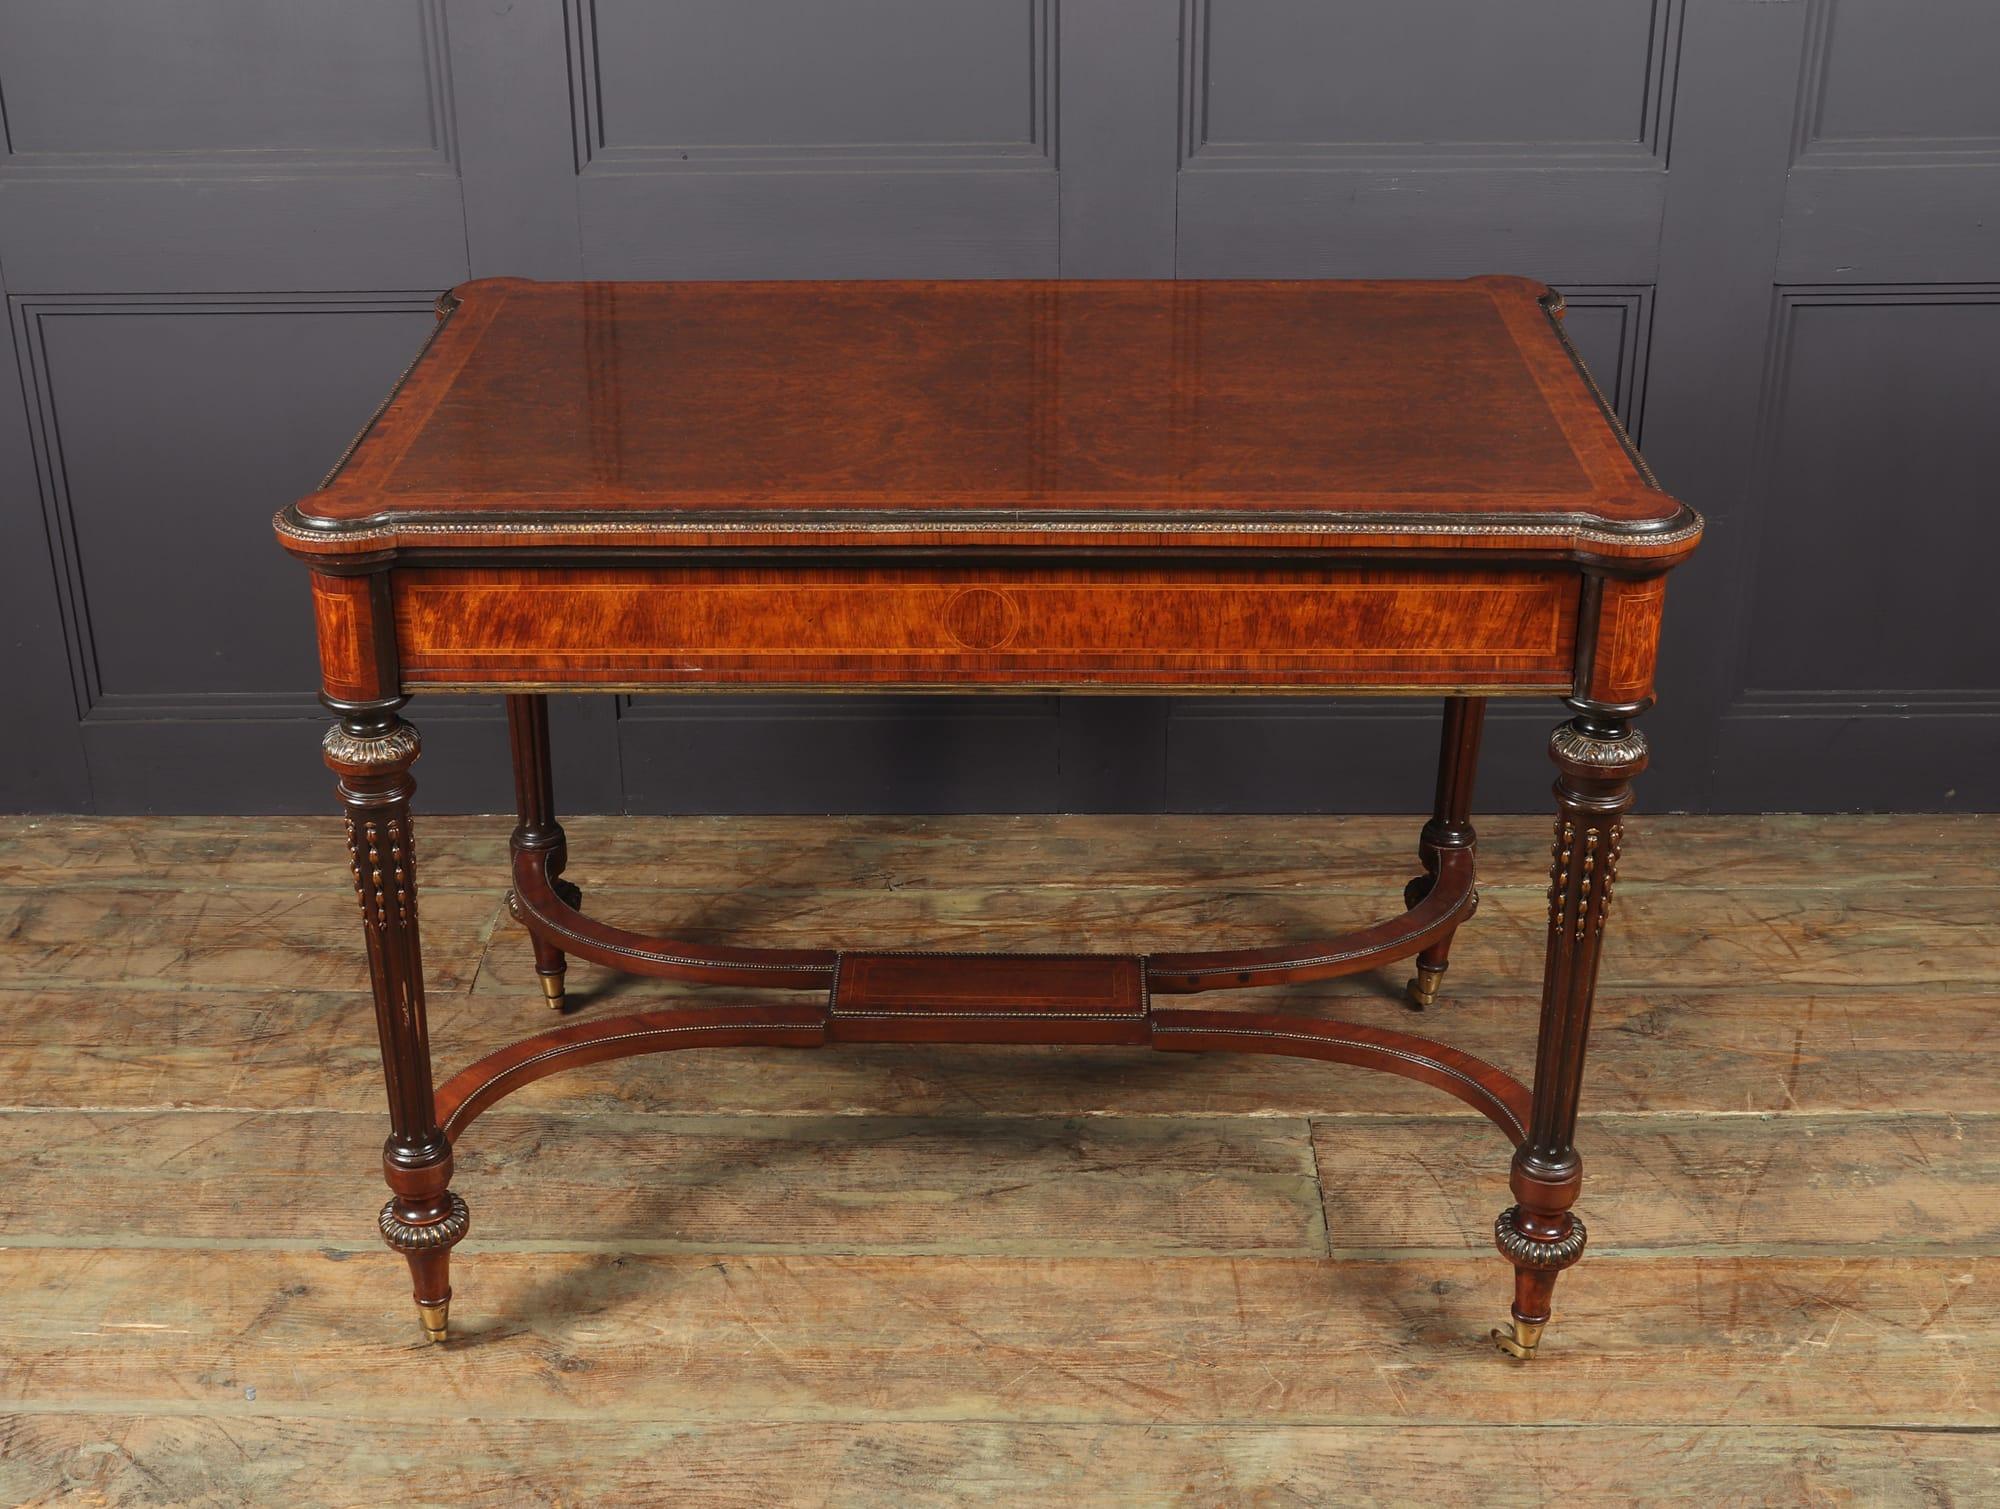 British Antique English Burr Walnut Inlaid Writing Table, c1880